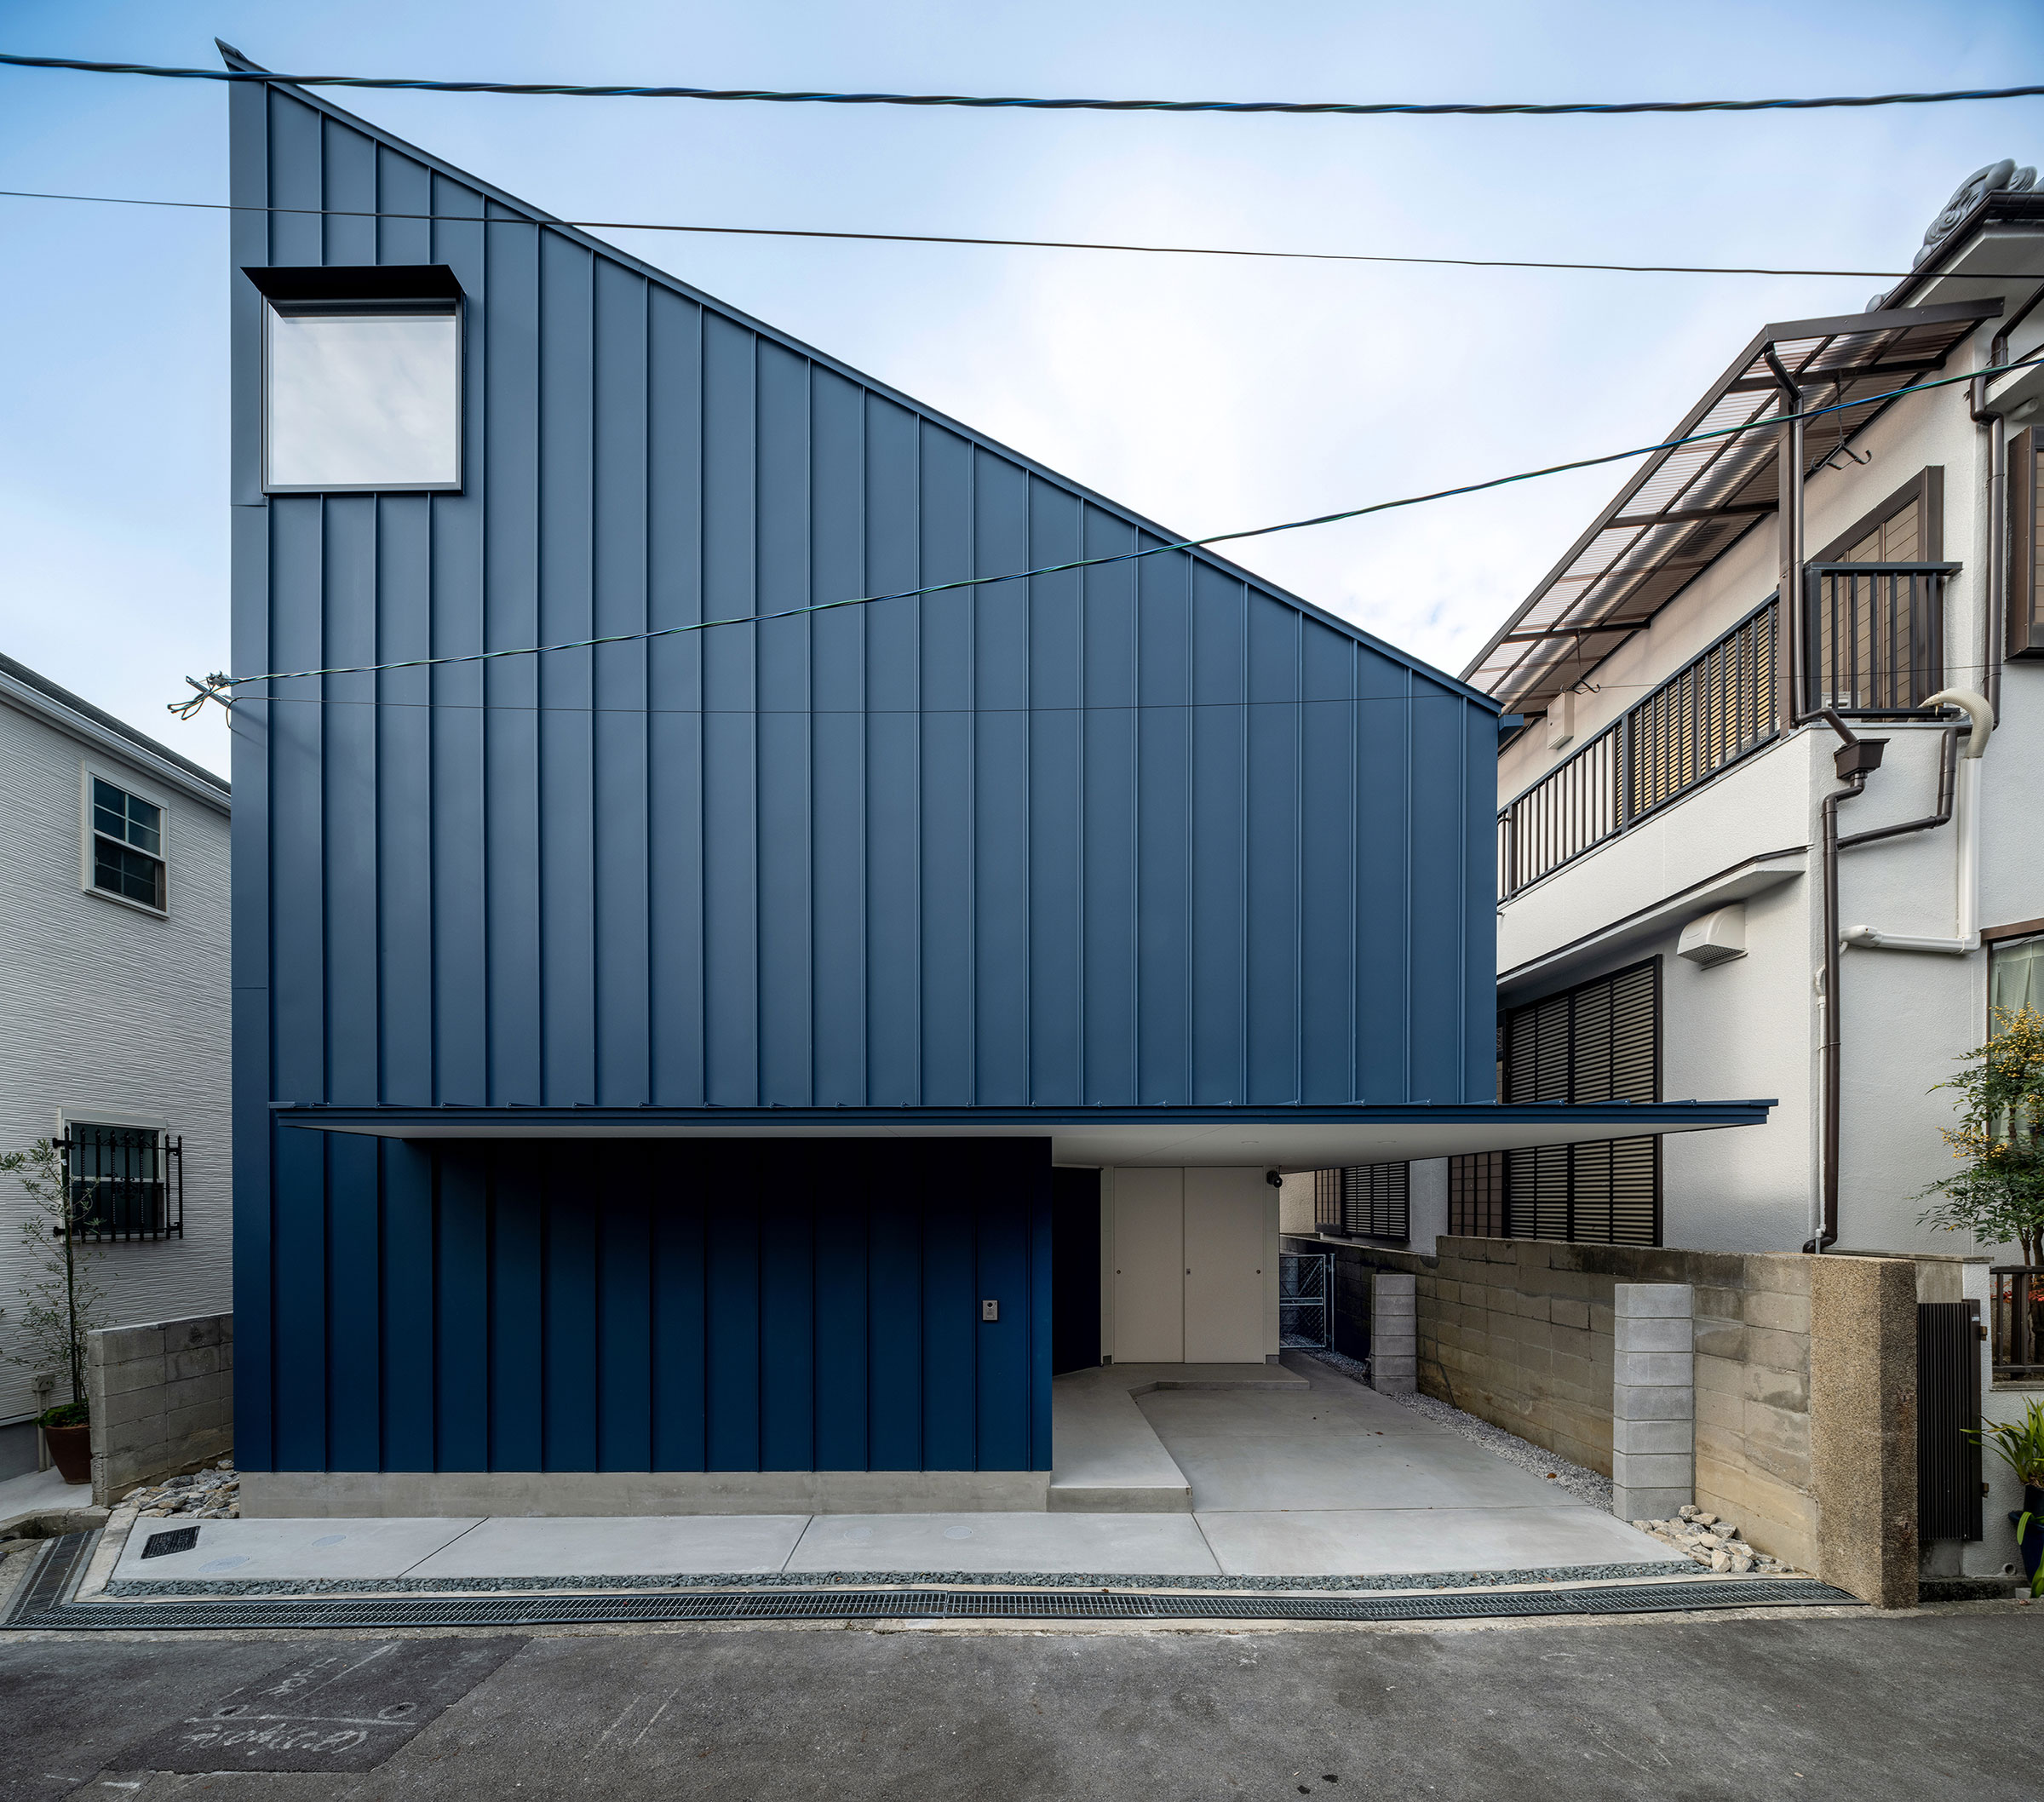 Horibe Associatesによる、大阪・吹田市の住宅「Navy Box」。厳しい法